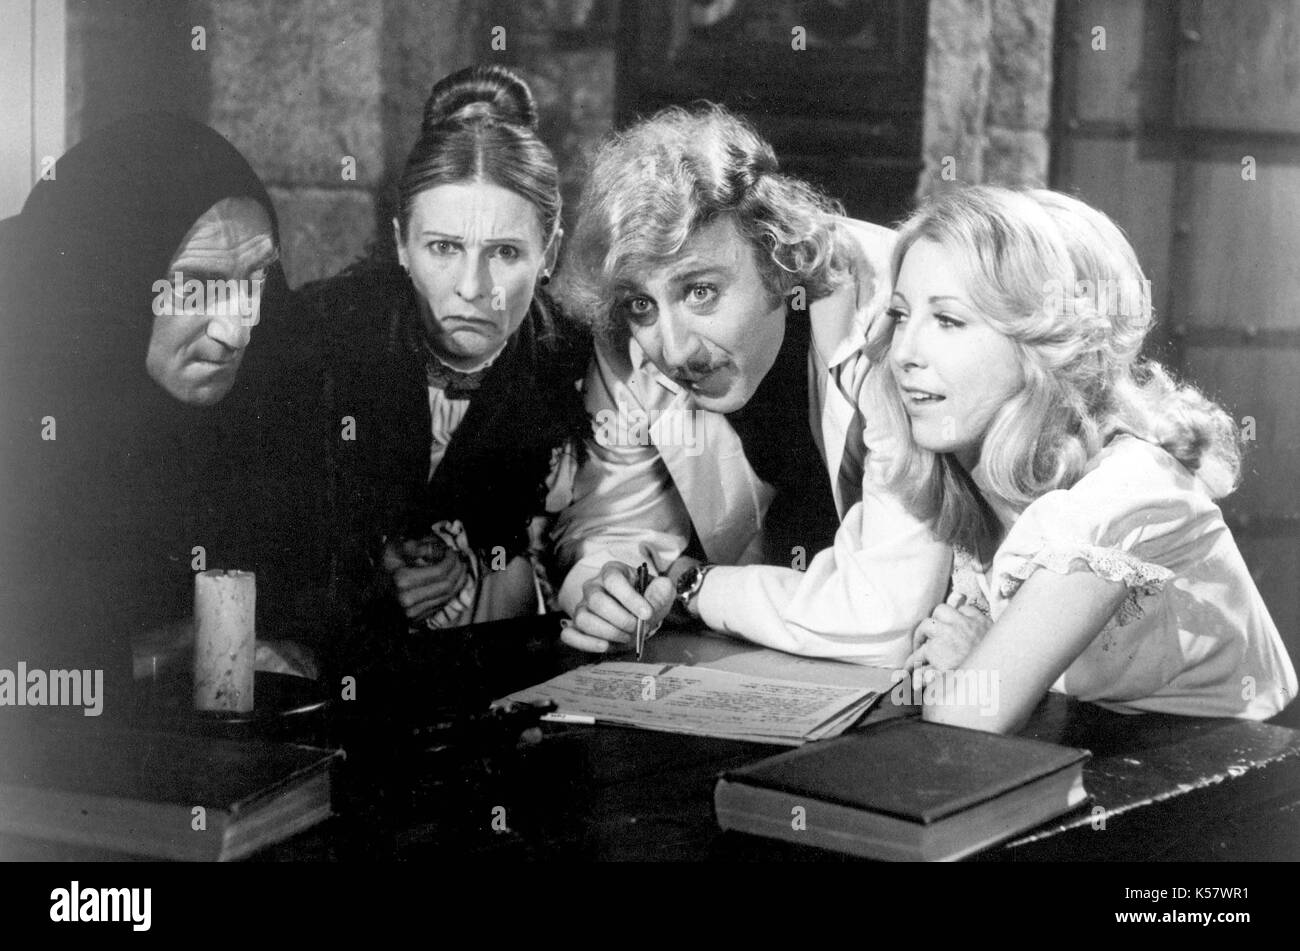 Photo Must Be Credited ©Alpha Press 070000 (1974) Marty Feldman as Igor, Cloris Leachman as Frau Blucher, Gene Wilder as Dr. Frankenstein and Teri Garr as Inga in the movie Young Frankenstein. Stock Photo